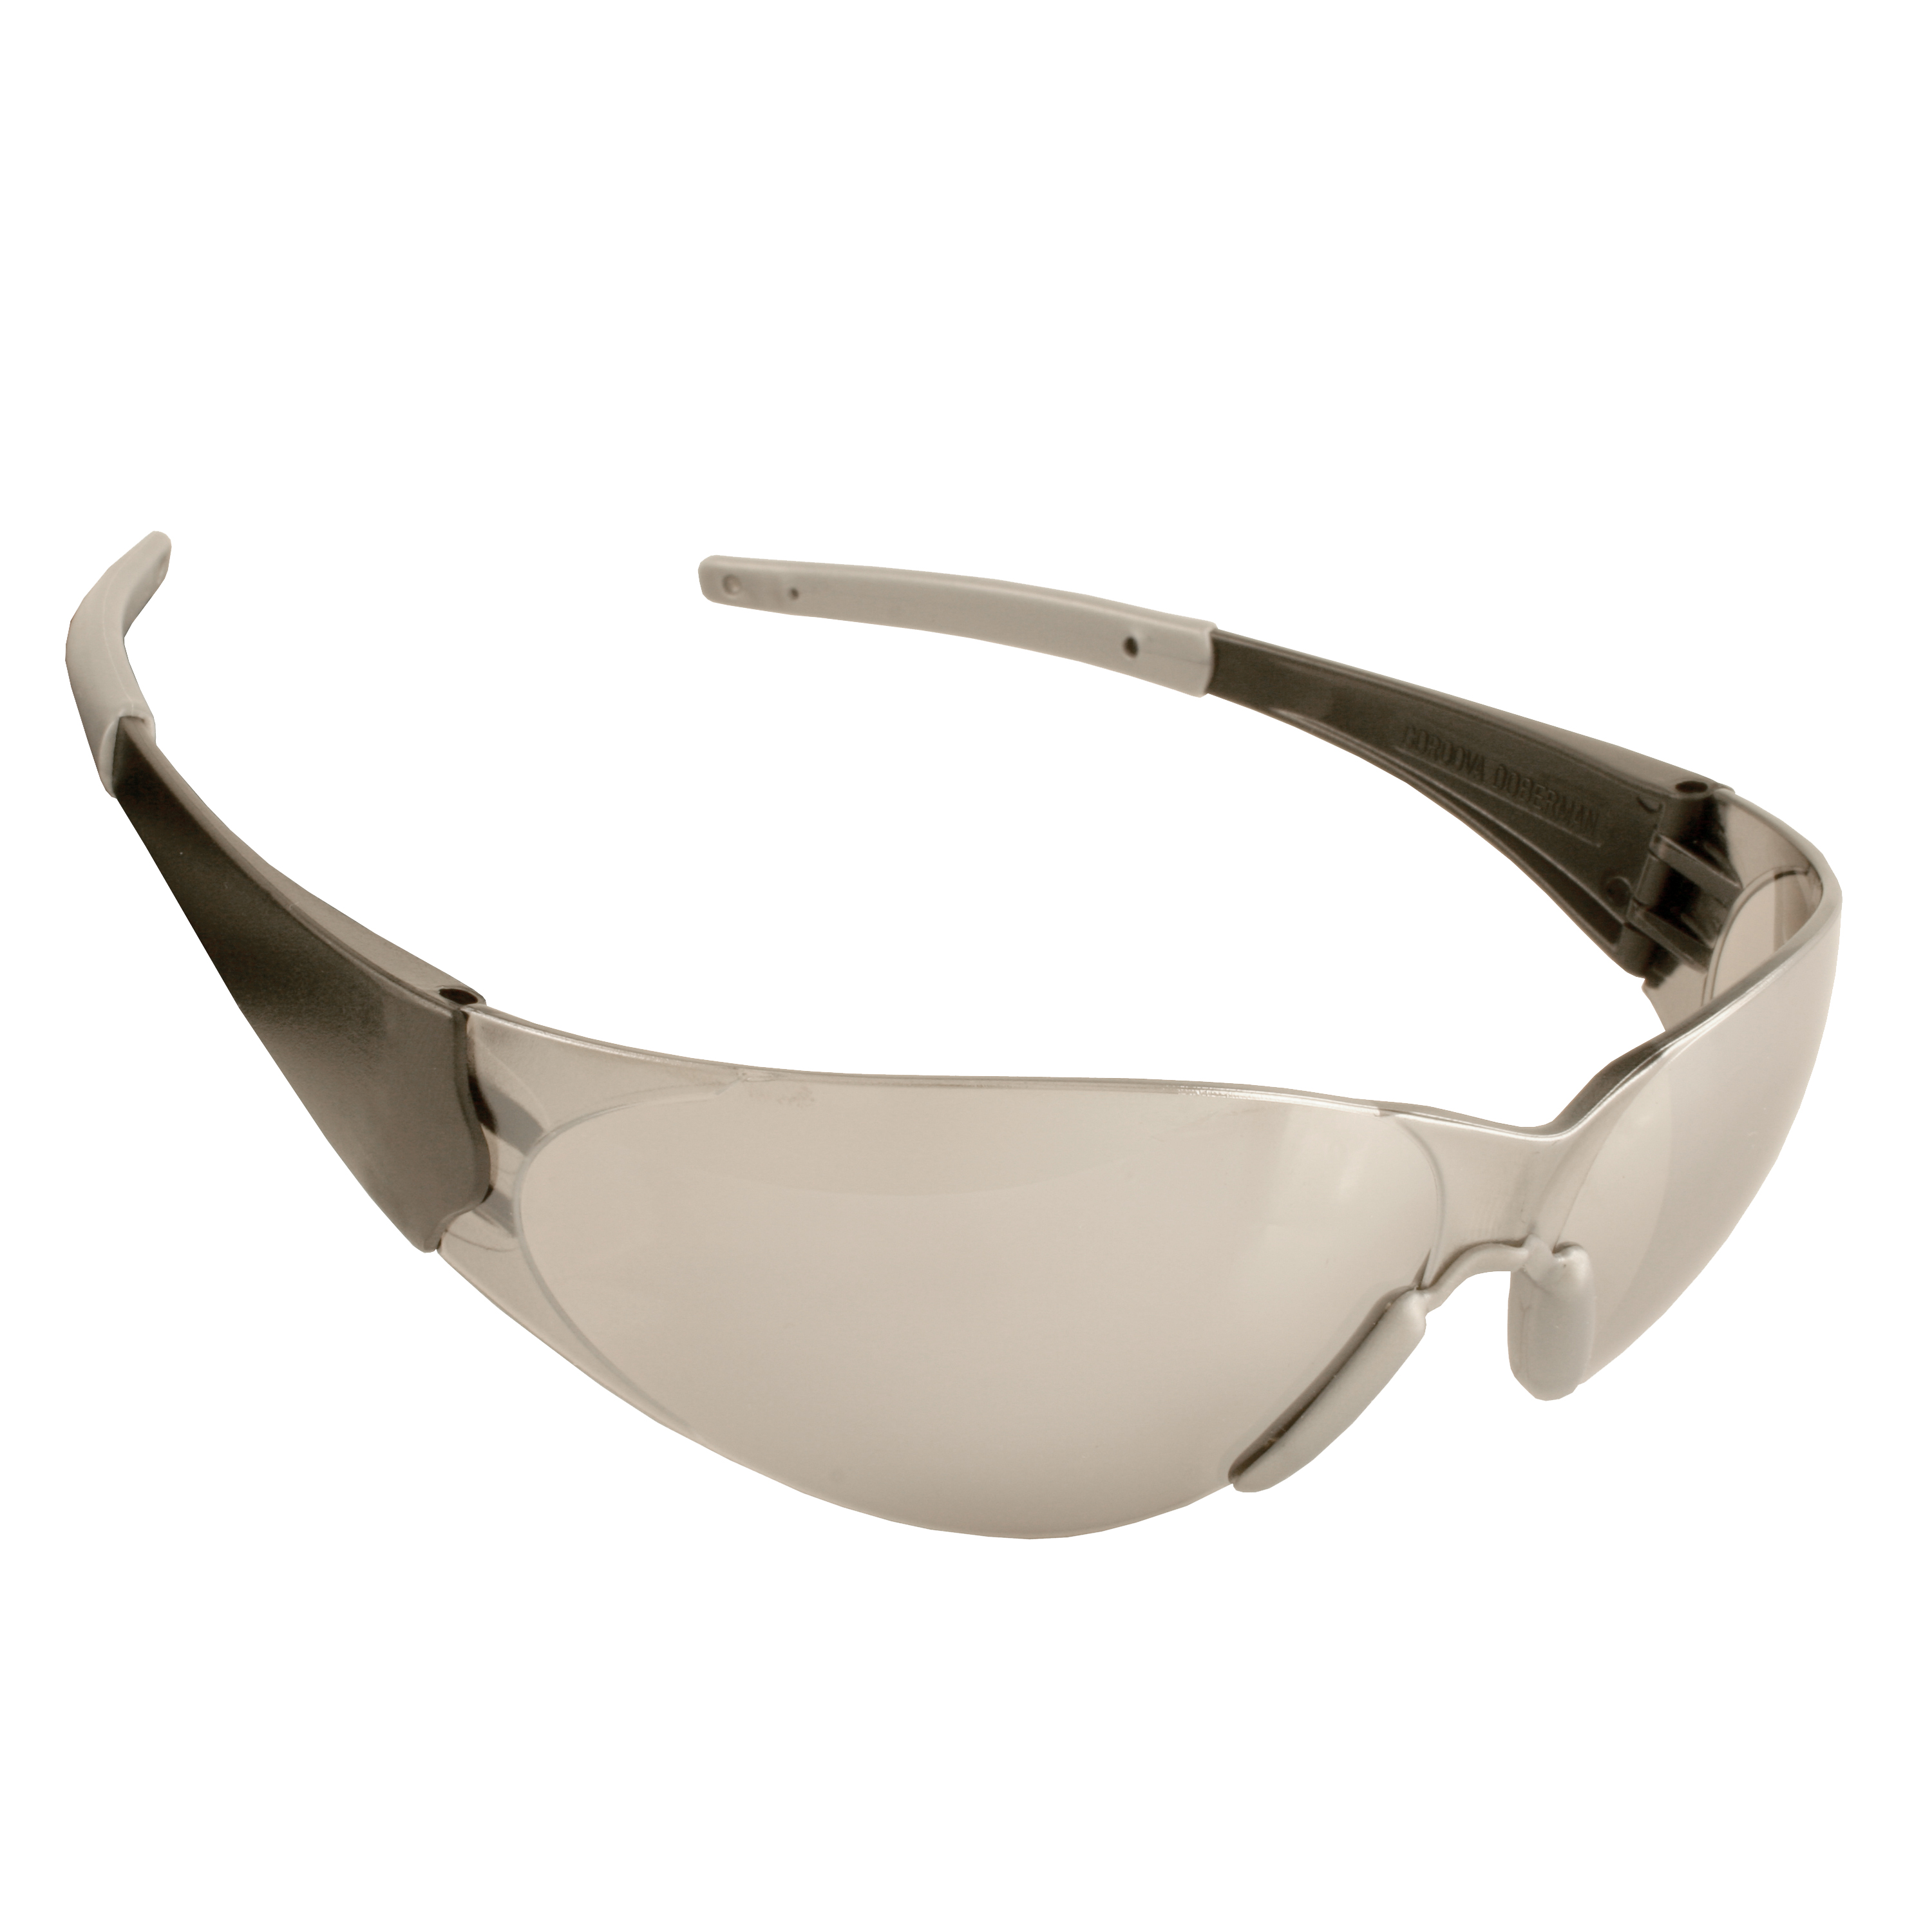 ENB50S Doberman safety glasses indoor/outdoor